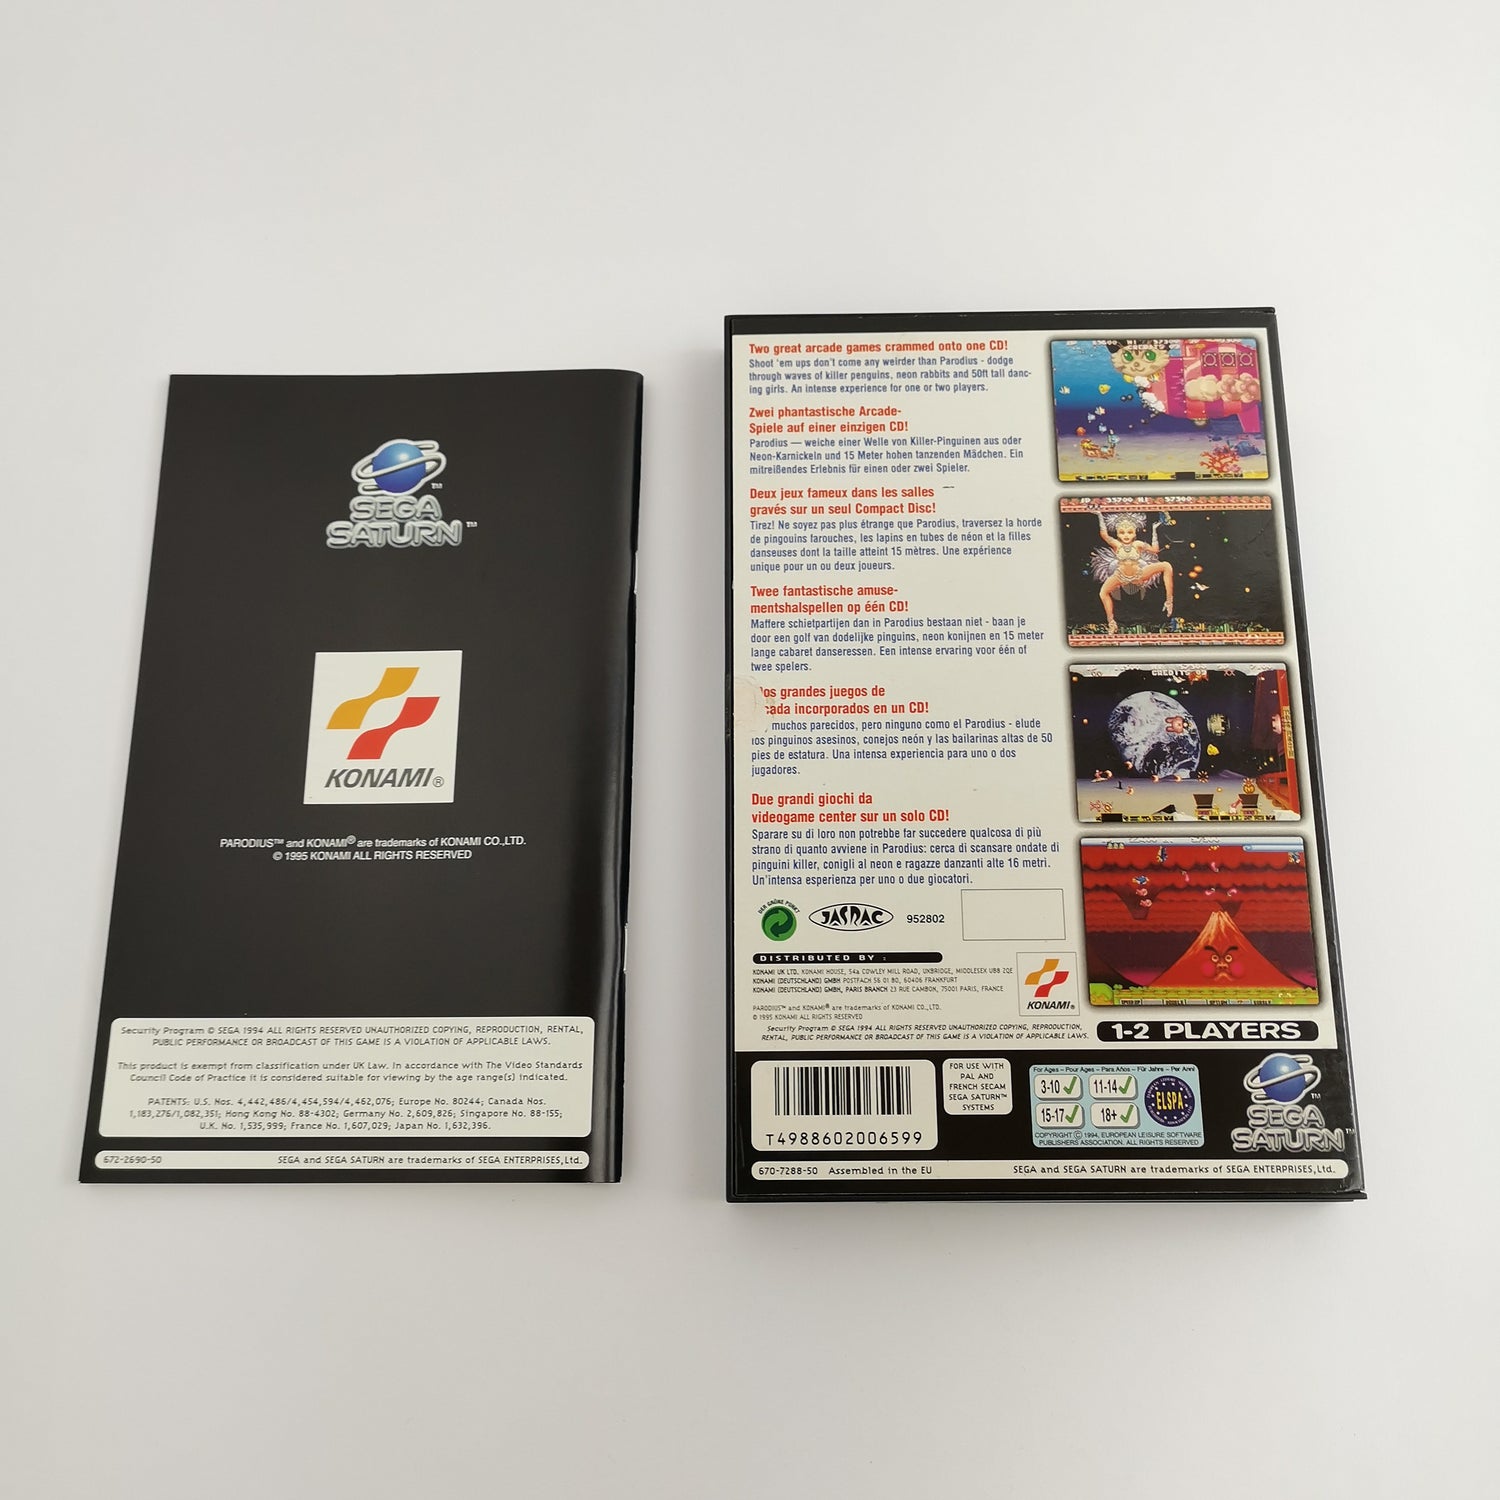 Sega Saturn game: Parodius from Konami - original packaging & instructions | PAL version